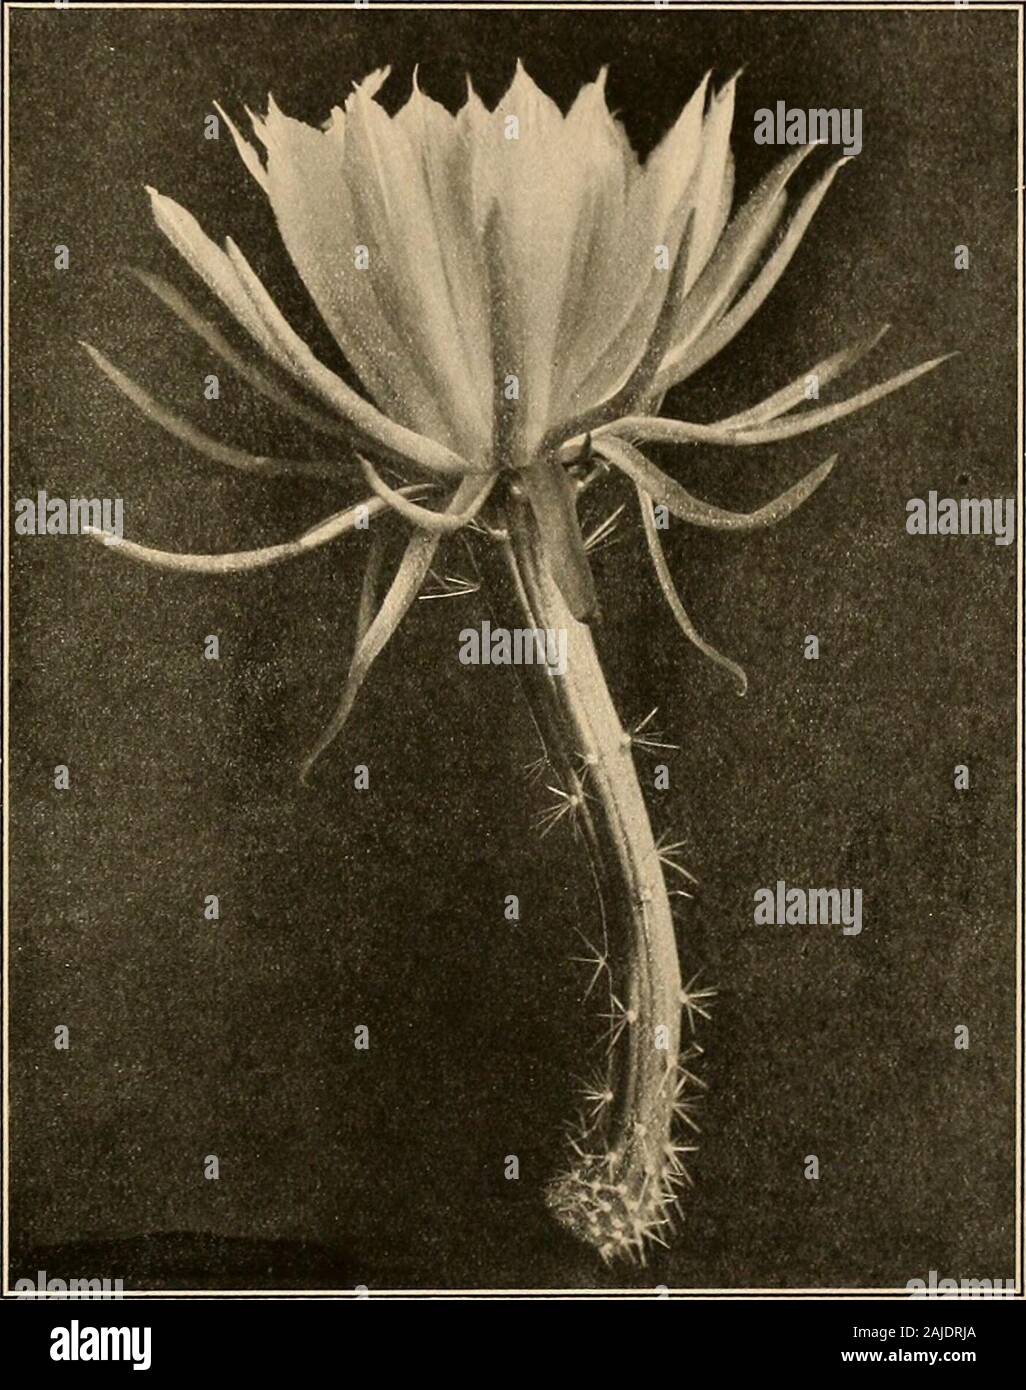 The Cactaceae : descriptions and illustrations of plants of the cactus family . M. E. Eaton del 1. Fruit of Hylocereus trigonus. 2. Flower of Selenicereus boeckmannii 3. Fruit of Selenicereus boeckmannii. (All natural size.) SELENICEREUS. 205 Illustrations: Monatsschr. Kakteenk. 9:23; Rep. Mo. Bot. Gard. 16: pi. n, f. 4, 5;Schumann, Gesamtb. Kakteen Nachtr. f. 7; Bliihende Kaktecn 3: pi. 161, 162; Wildeman,Icon. Select. 3:pi. 103, all as Cereus hamatus; Mollers Deutsche Gart. Zeit. 14: 340; DeLaet, Cat. Gen. f. 30, as Cereus rostratus; Rev. Hort. Beige 40: after 184, as Cereus kostratus;*Bull. Stock Photo